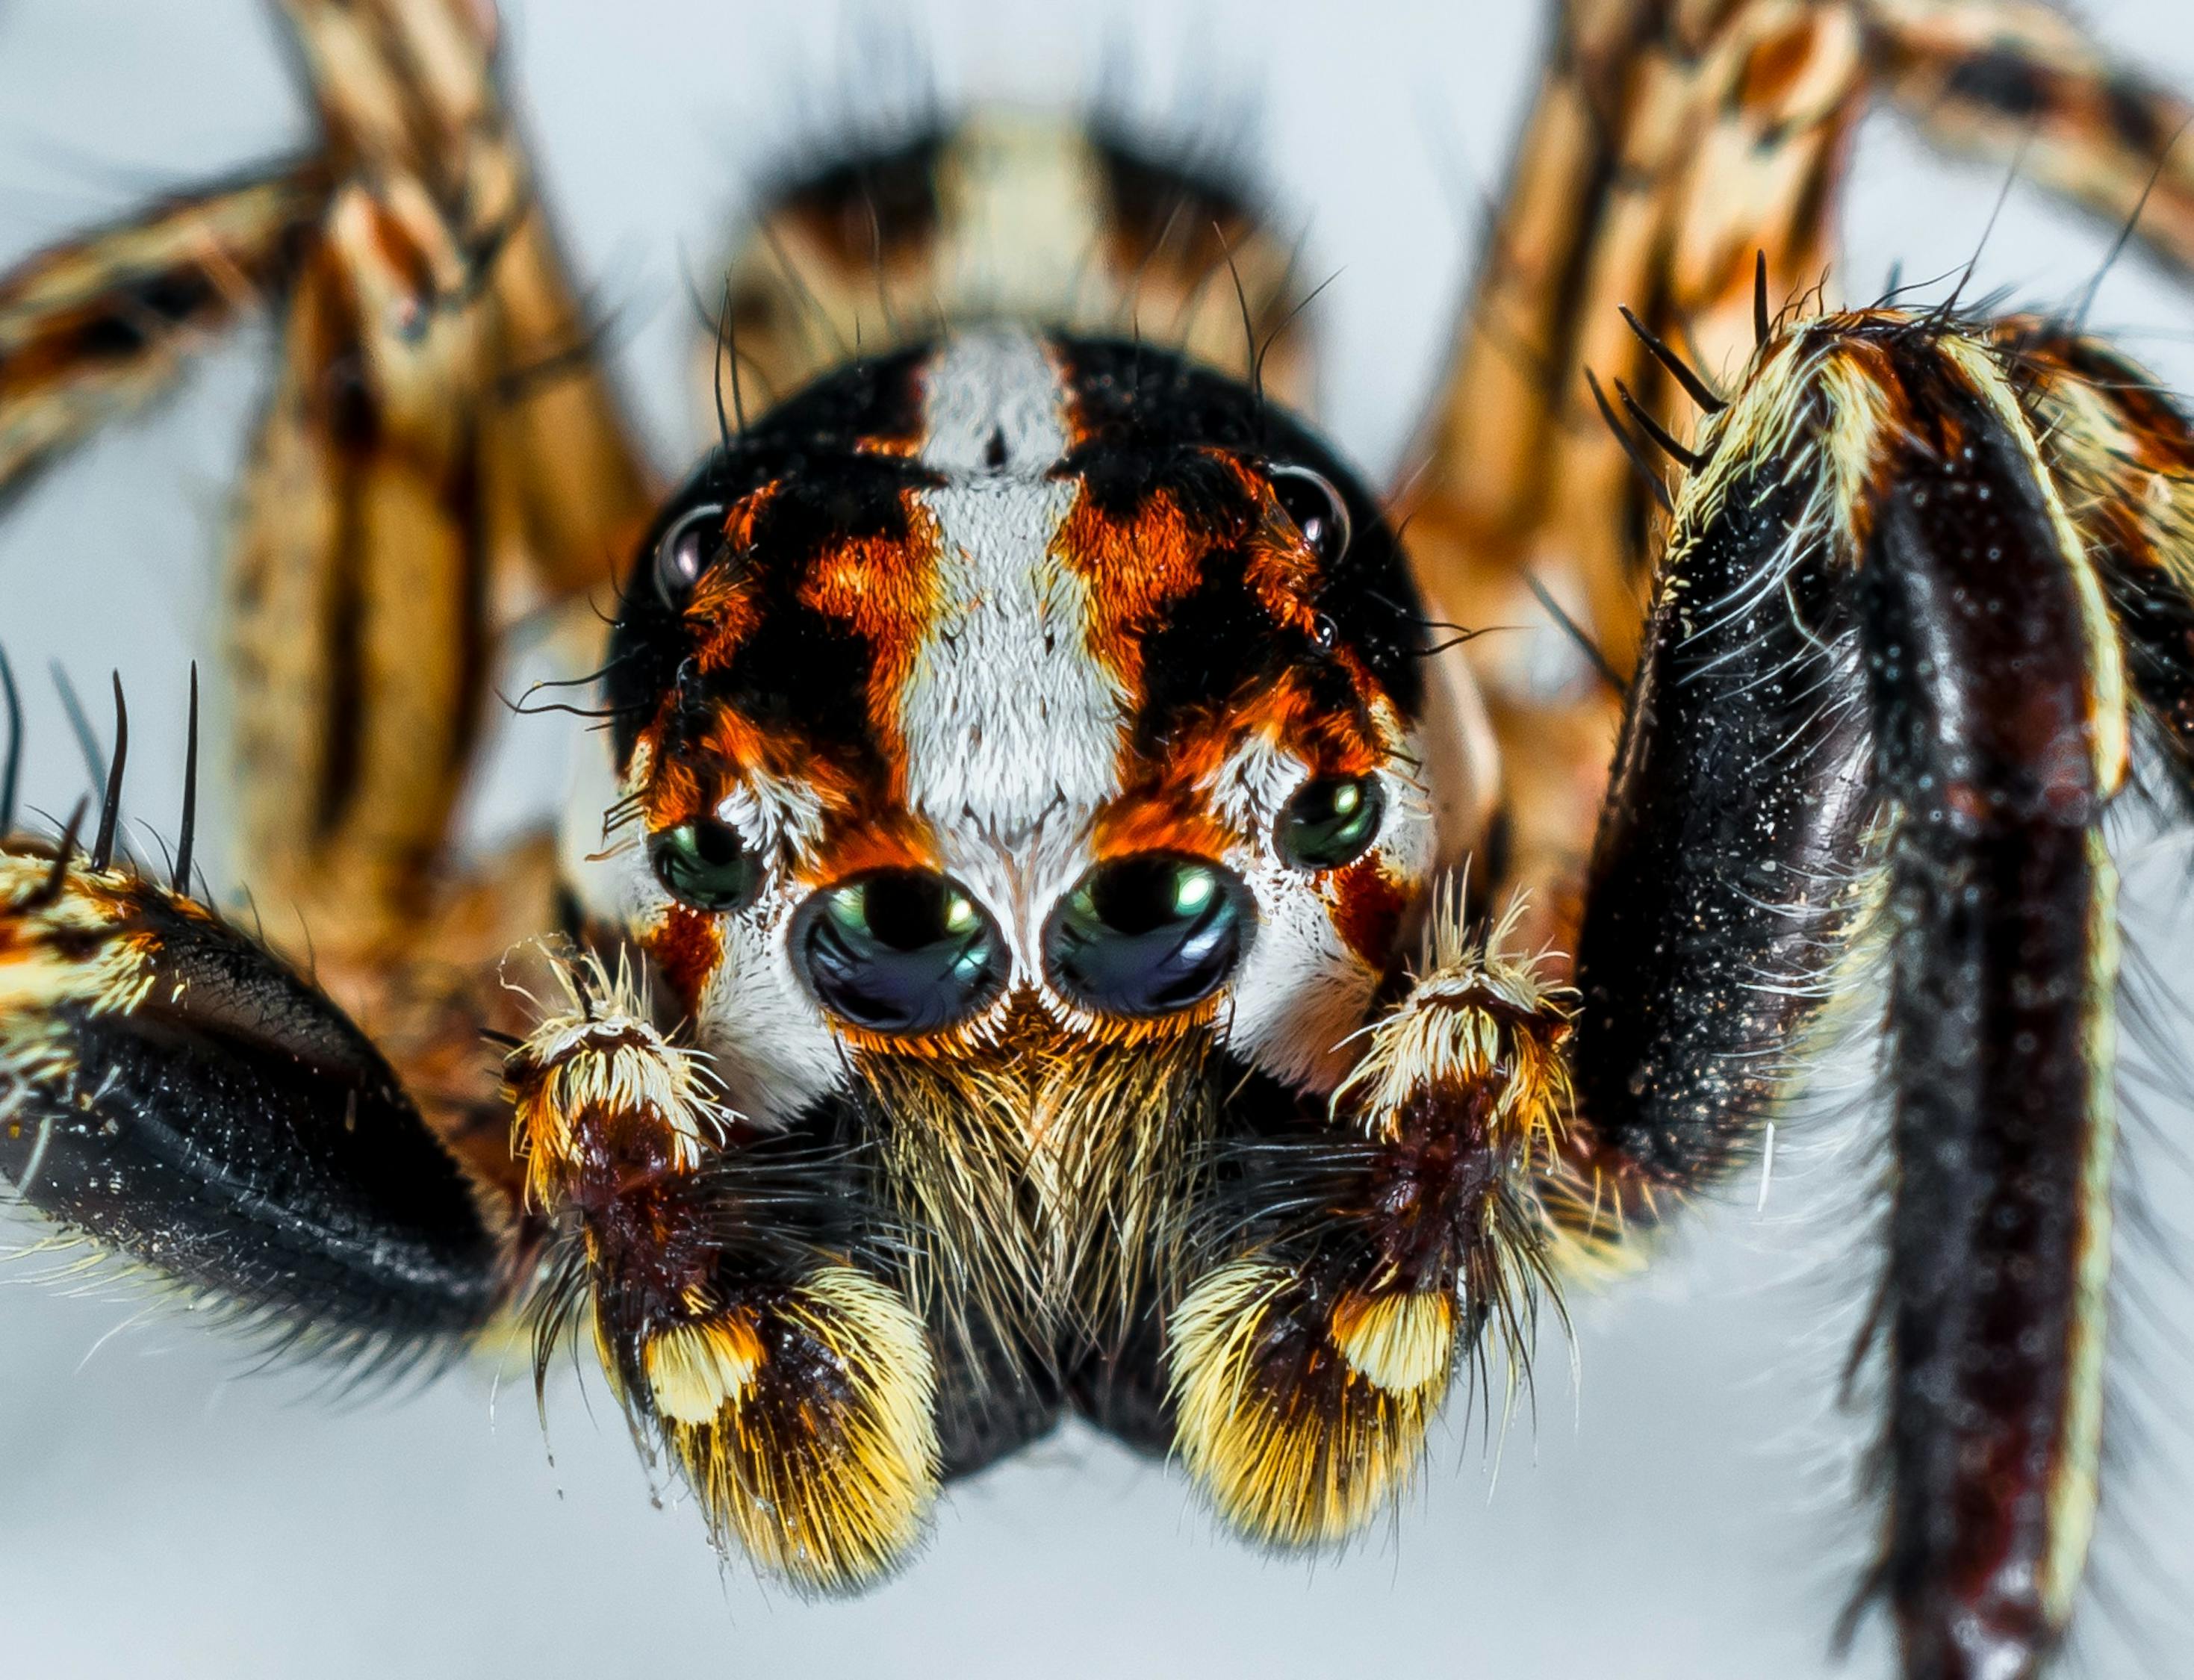 brazilian wandering spider adaptations